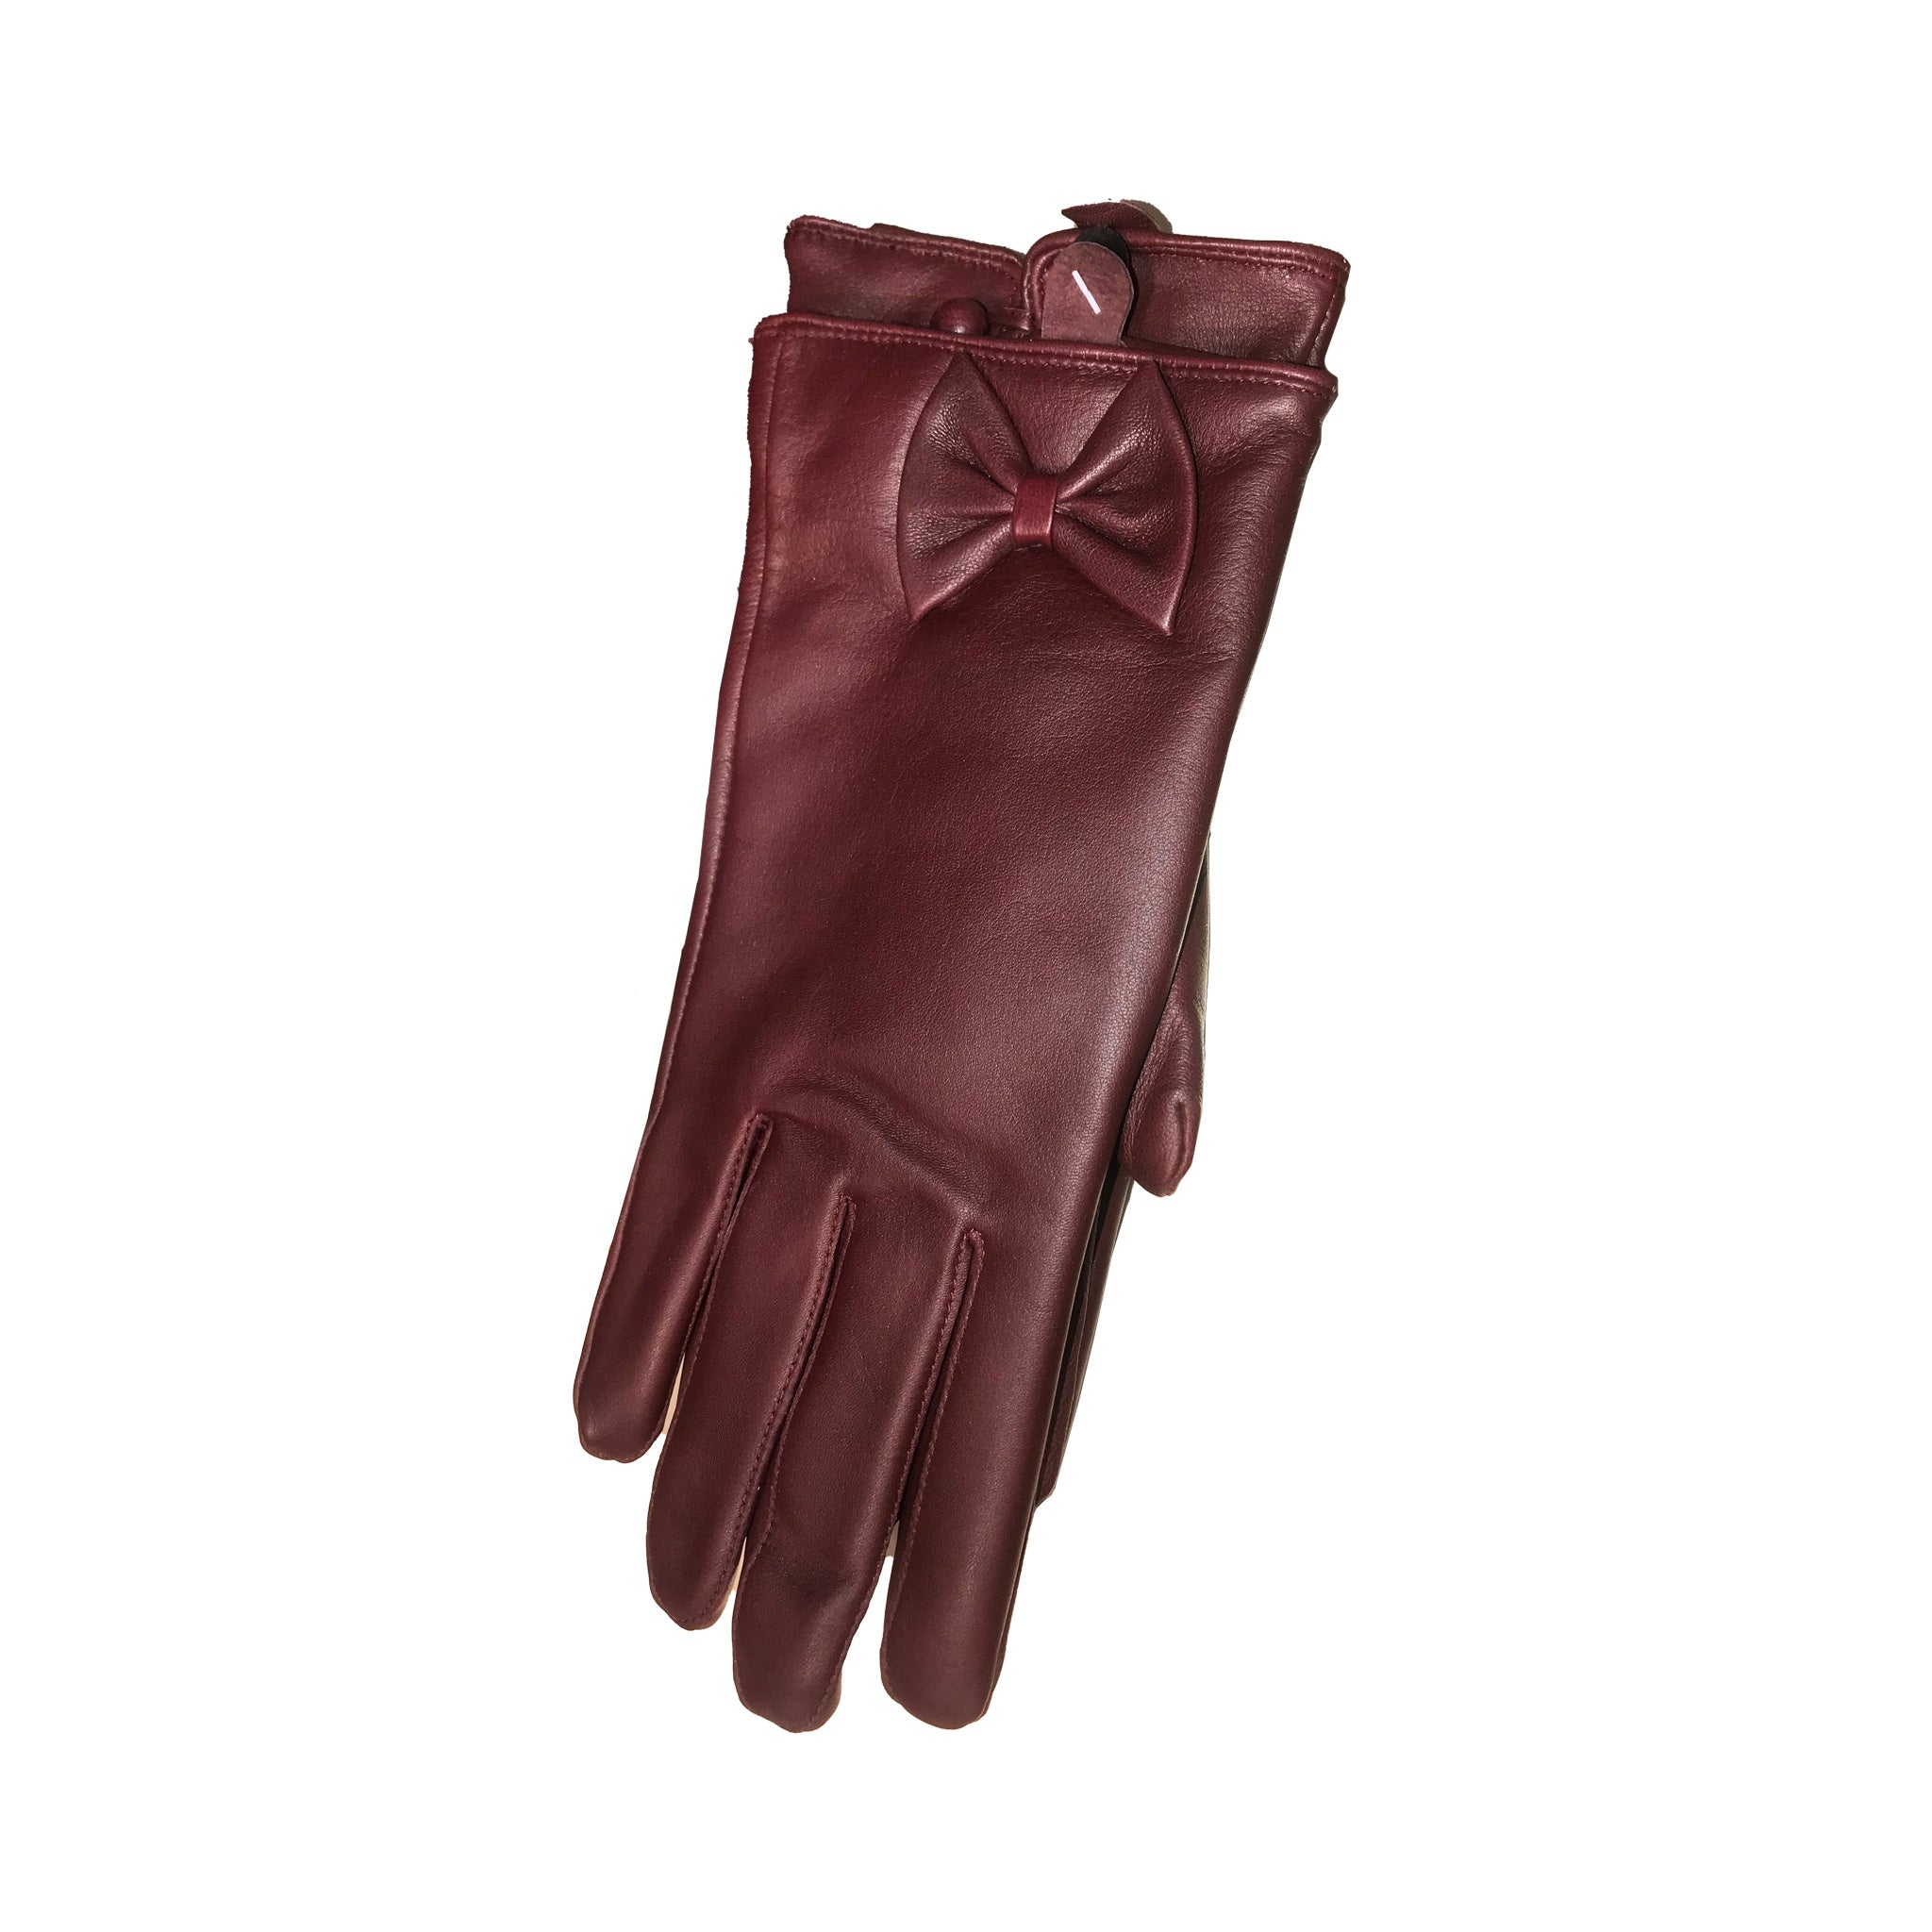 Women's Leather Gloves - Wine